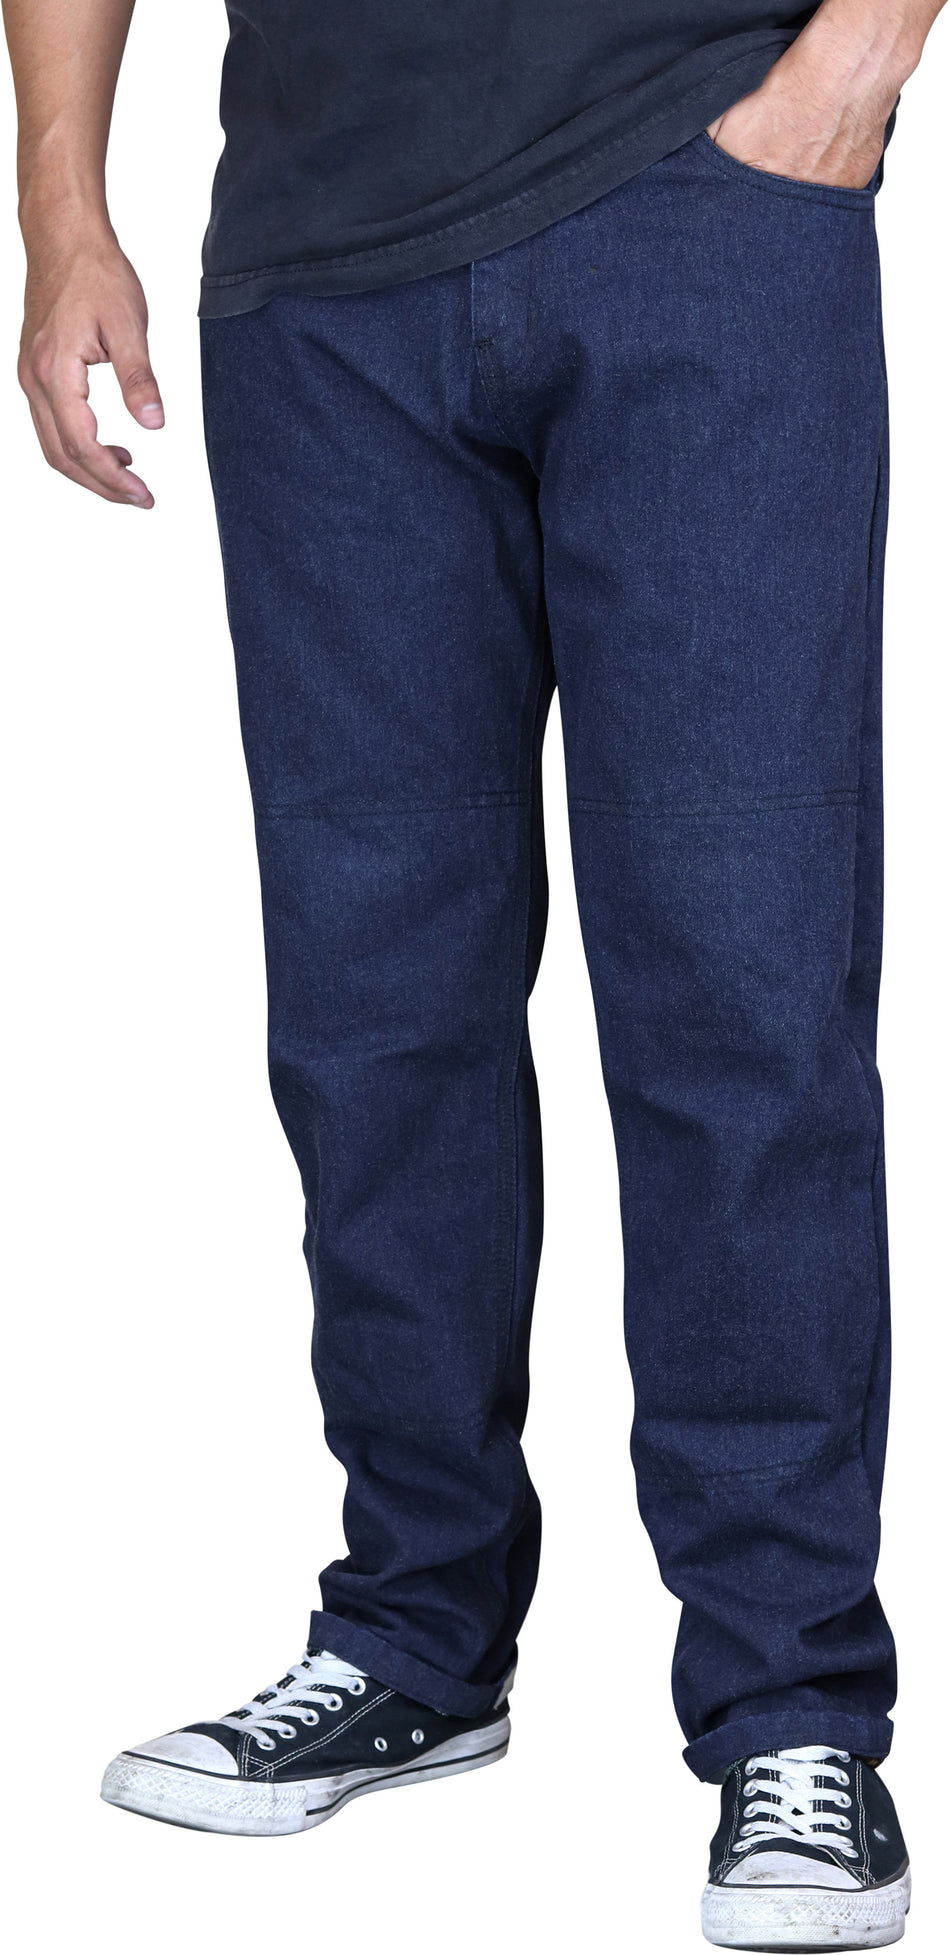 SCORPION EXO Covert Ultra Jeans Blue Size 34 4402-34